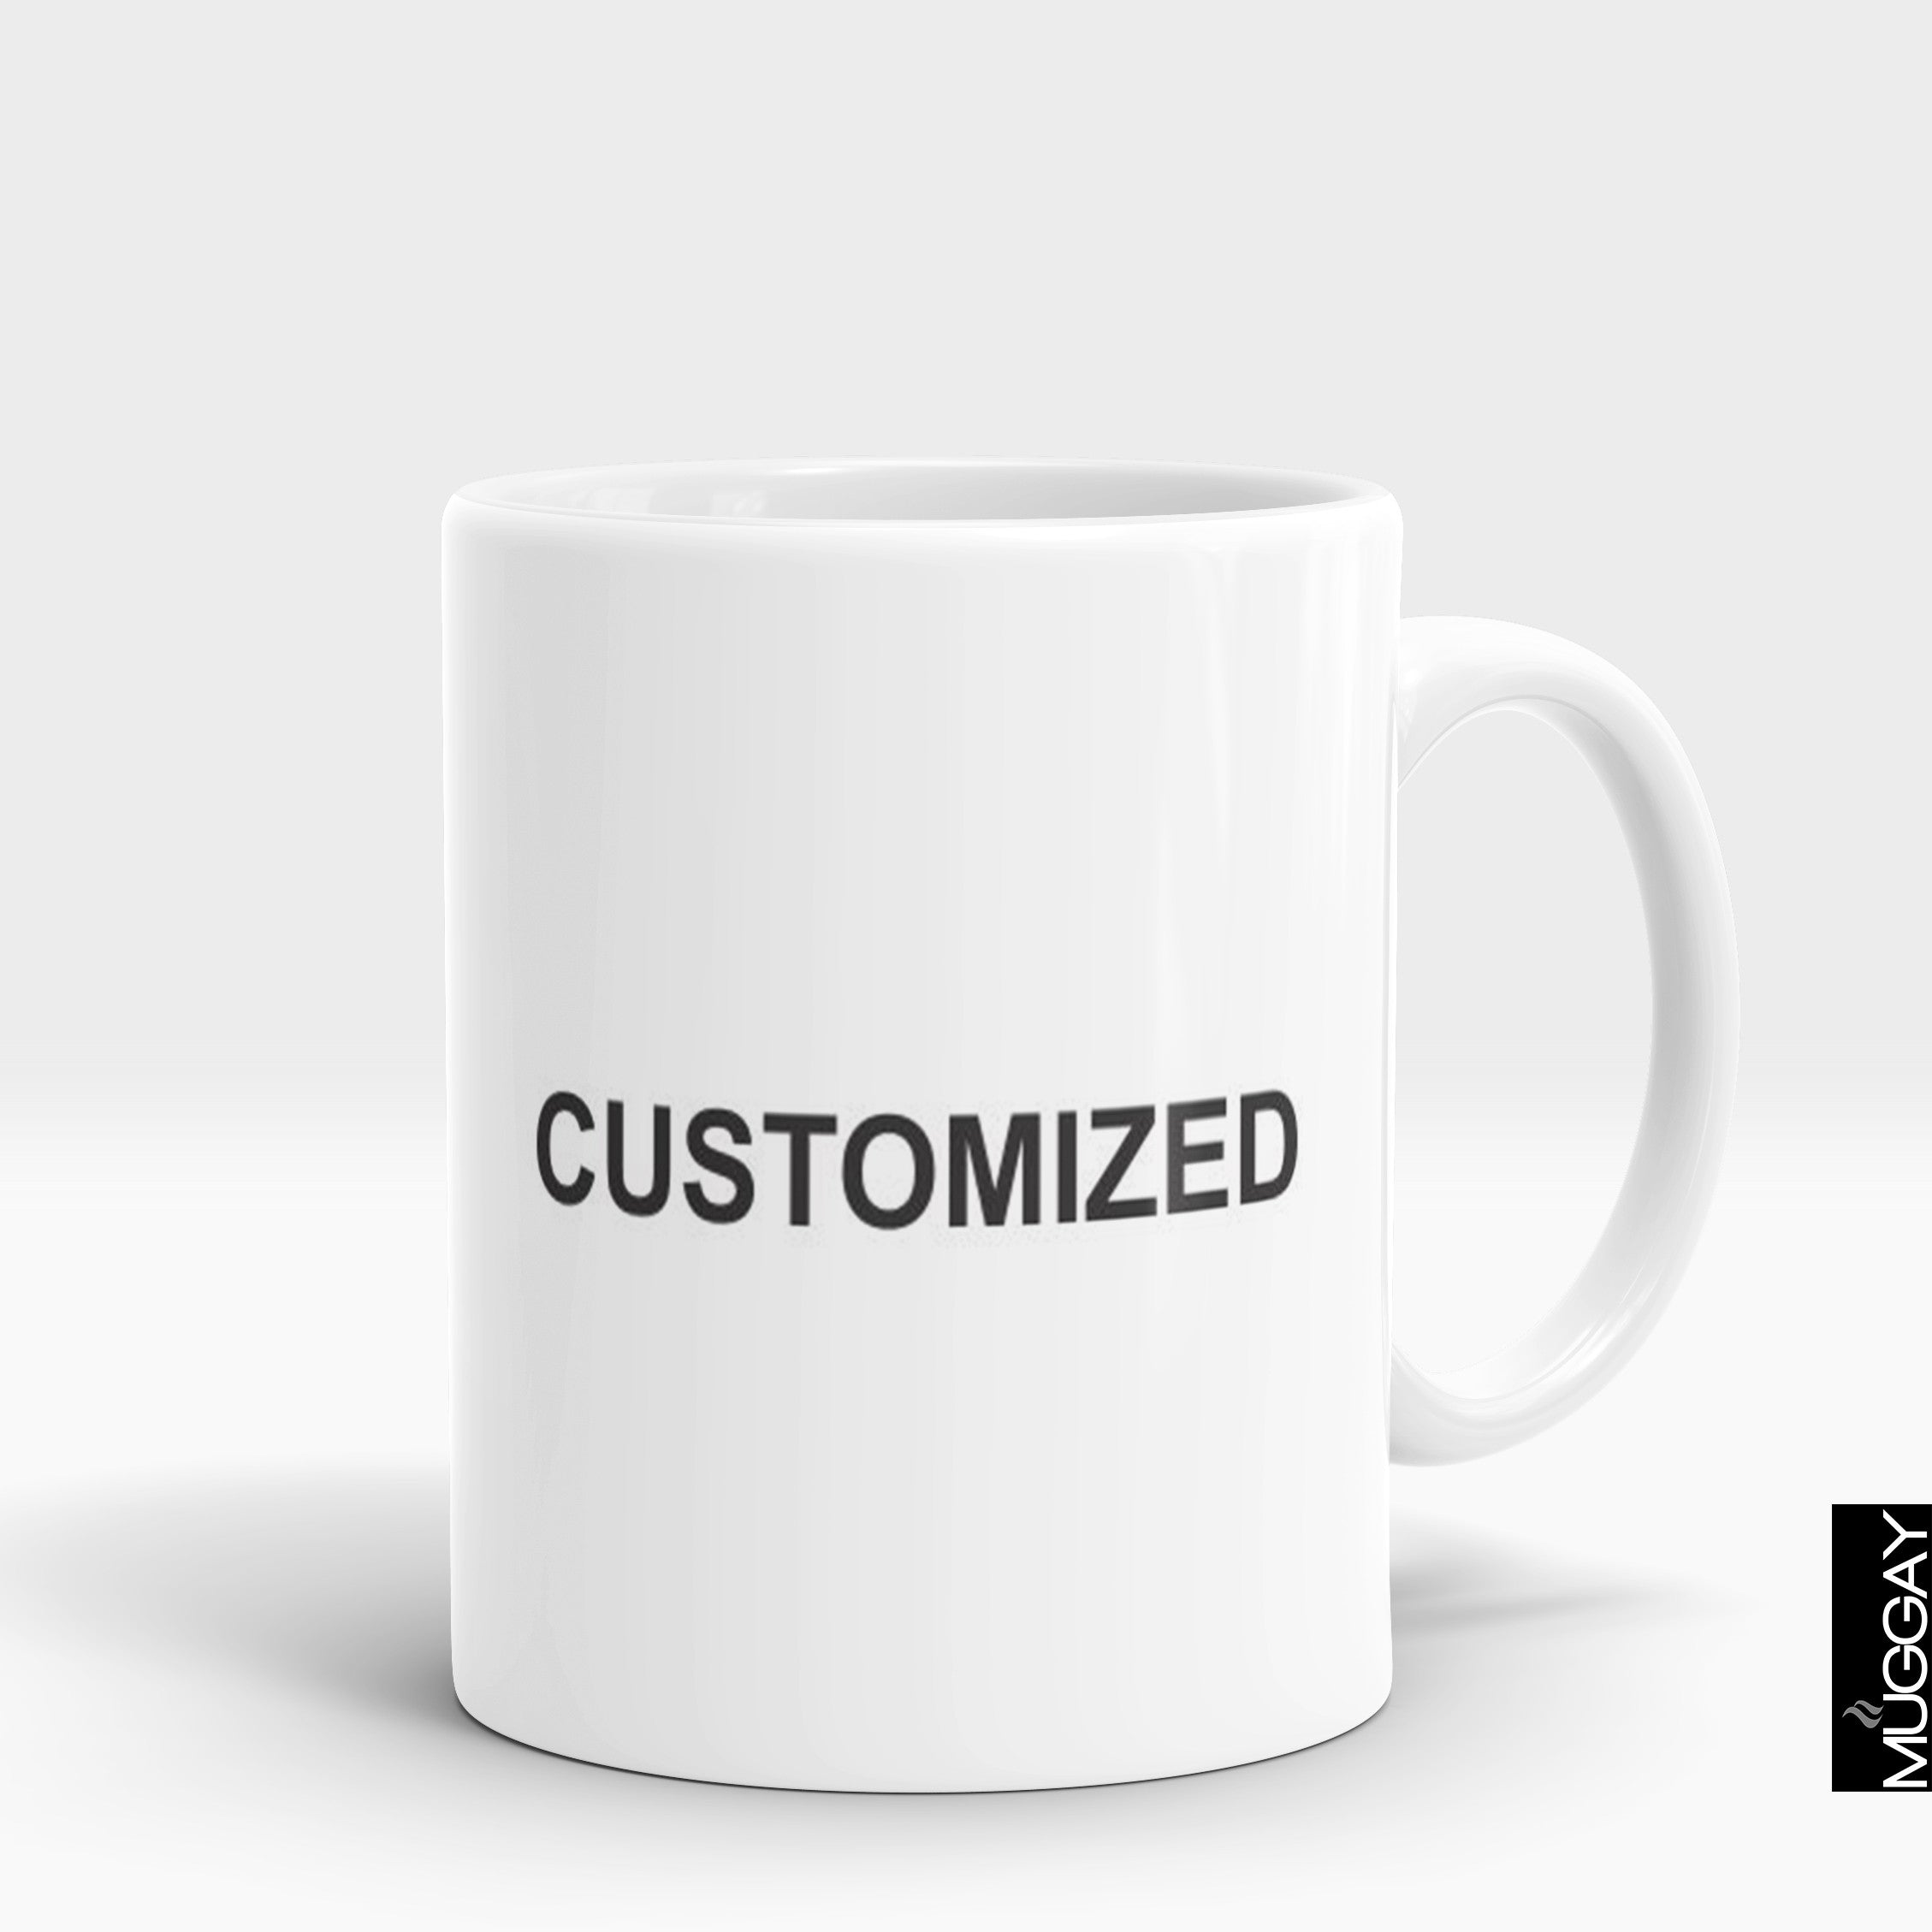 Customize your Mug - Muggay.com - Mugs - Printing shop - truck Art mugs - Mug printing - Customized printing - Digital printing - Muggay 